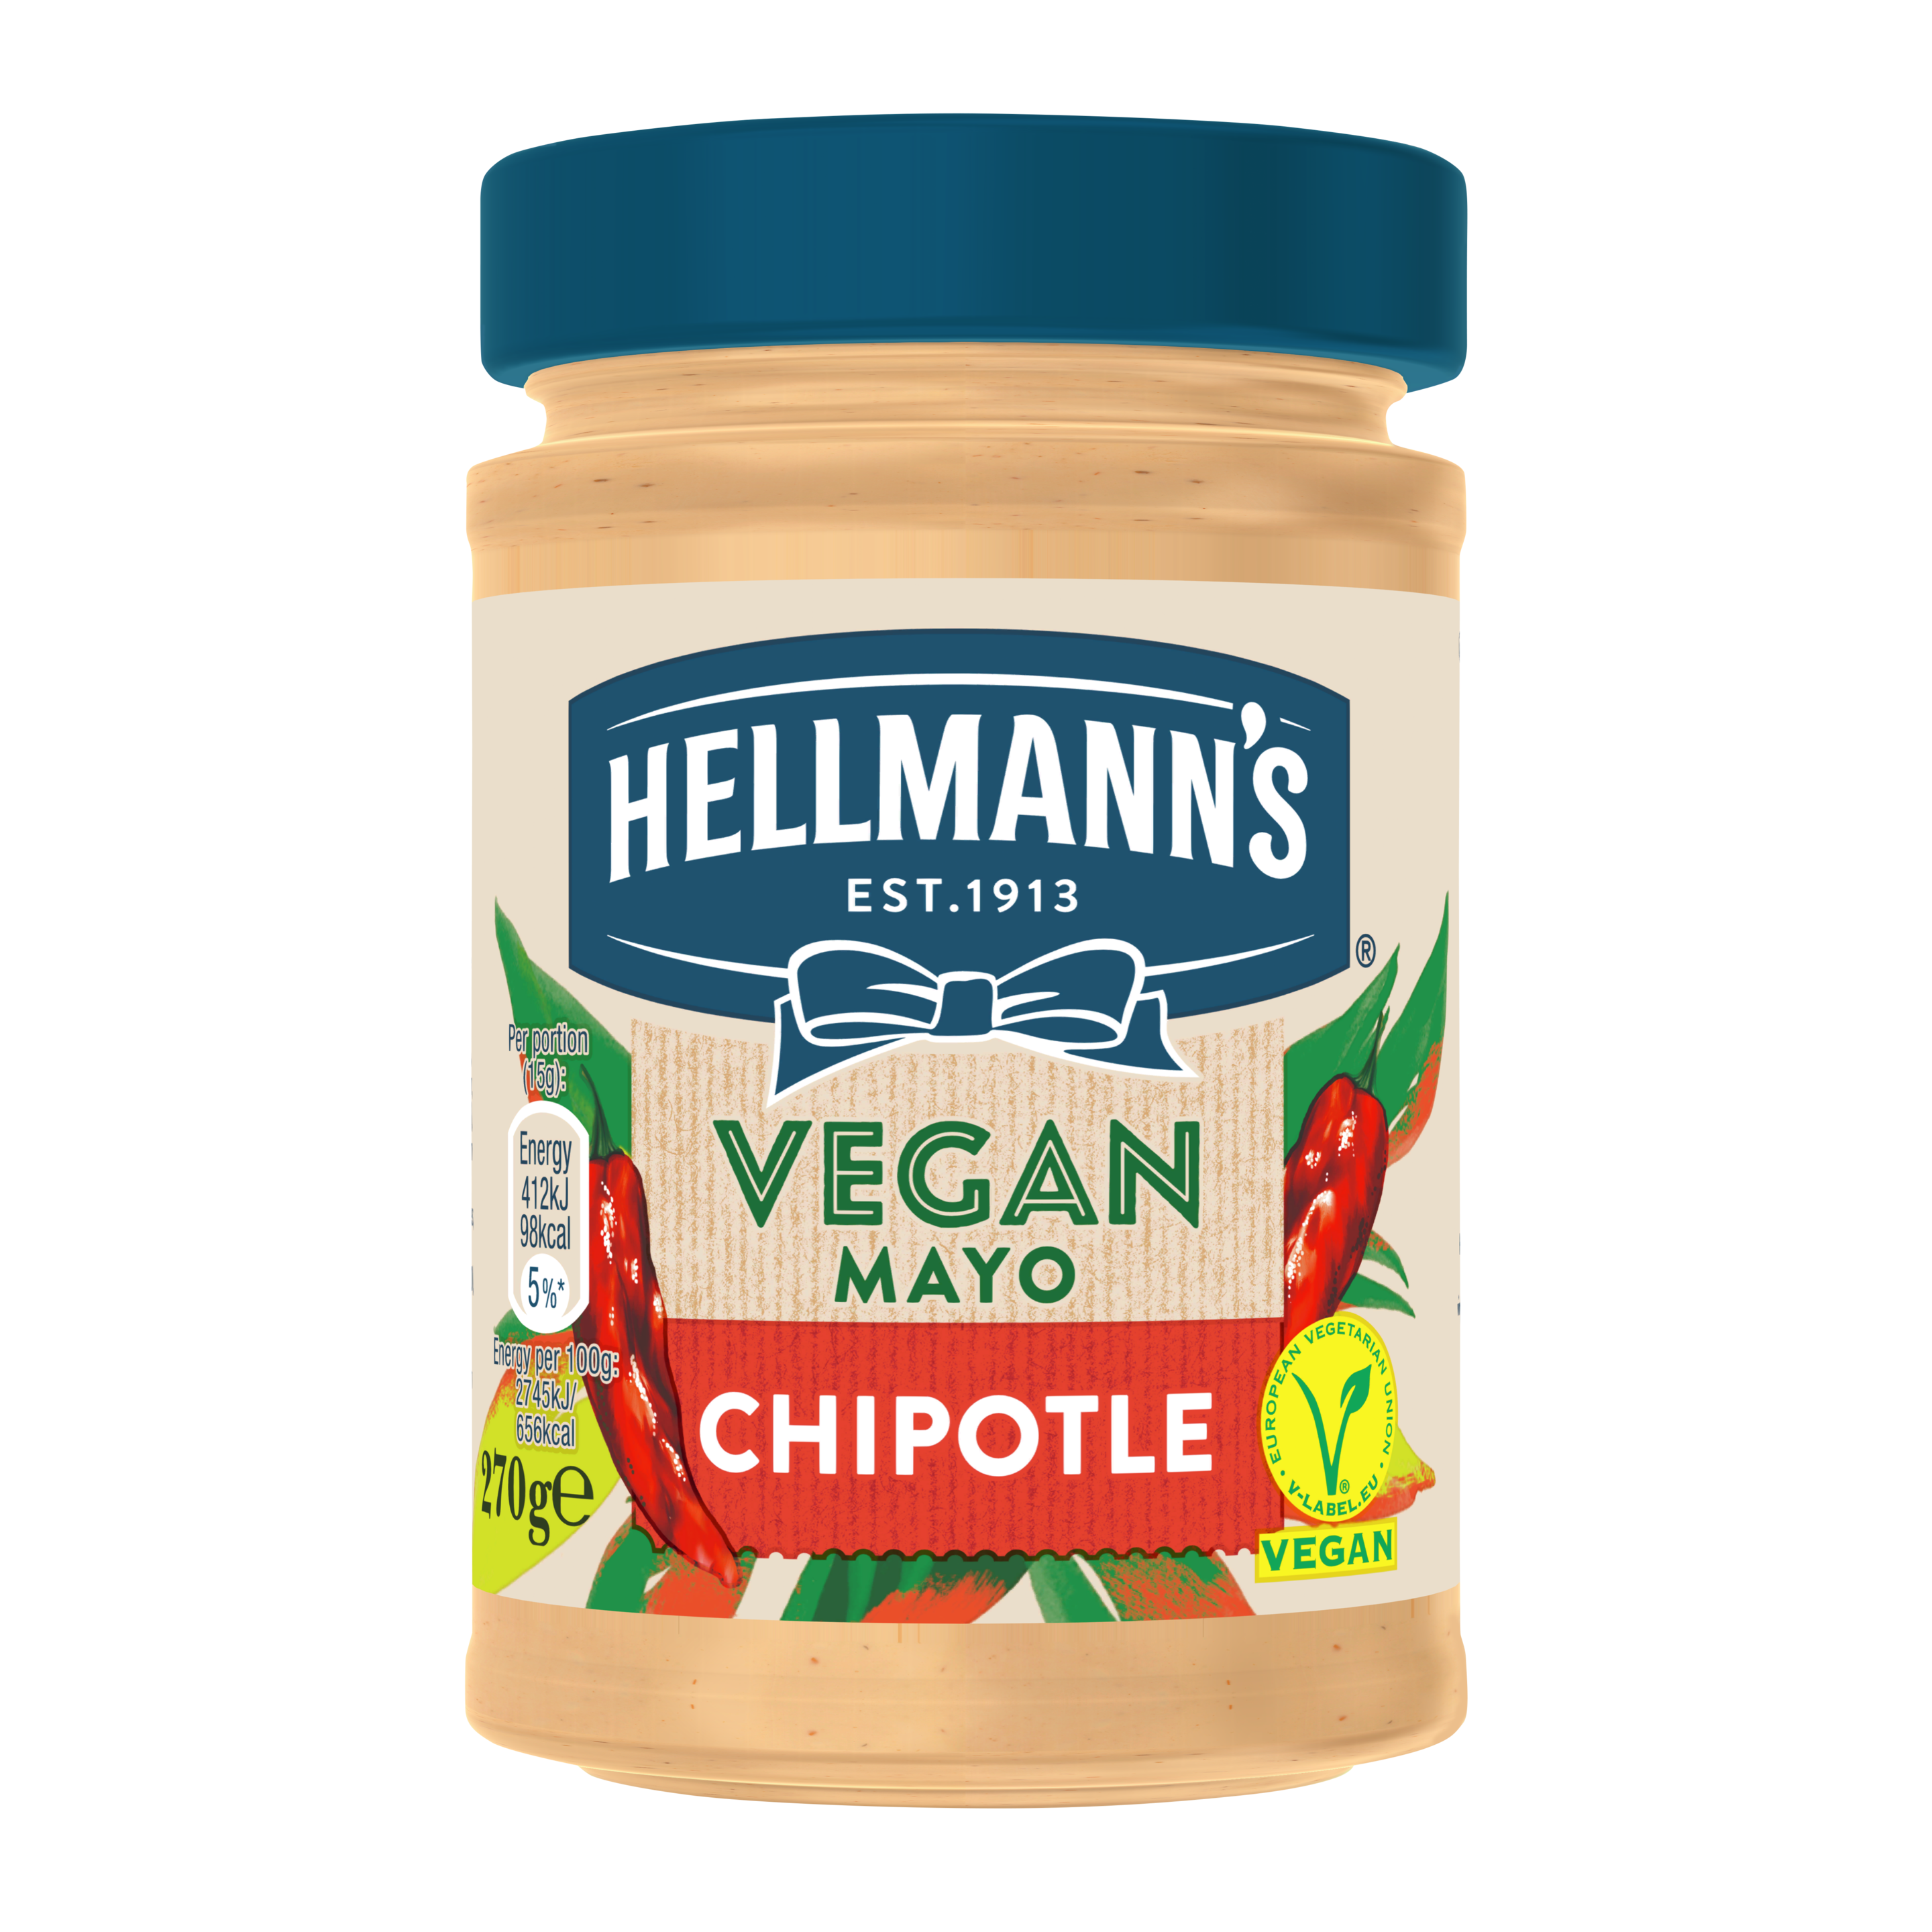 Hellmann's Vegan Chipotle Mayo